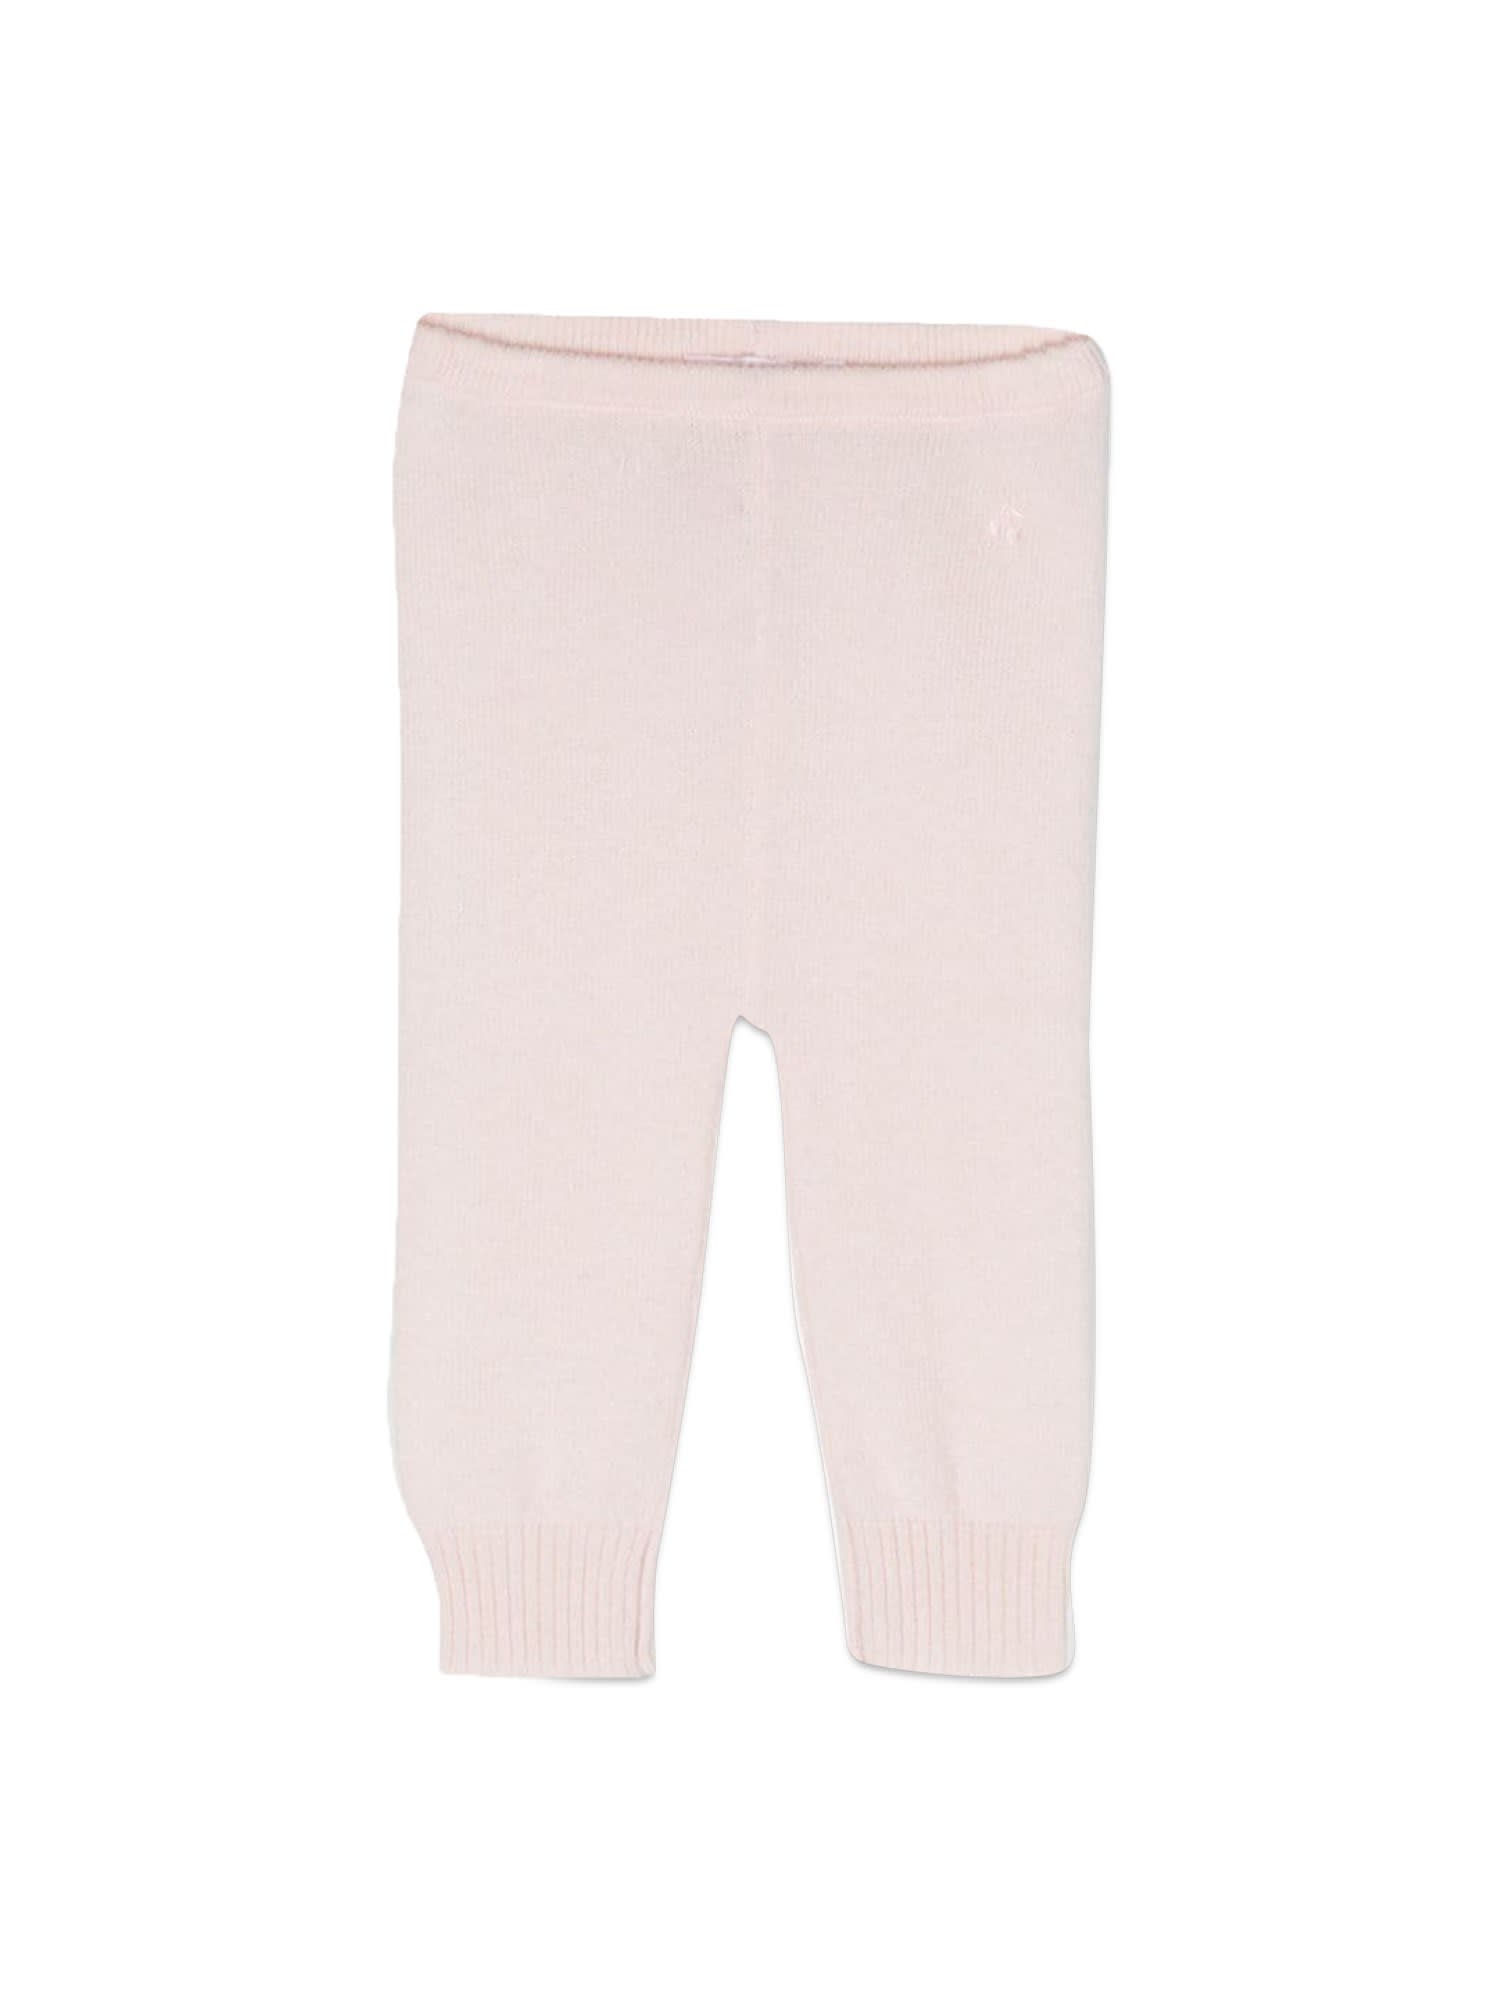 Bonpoint Babies' Leggings In Pink